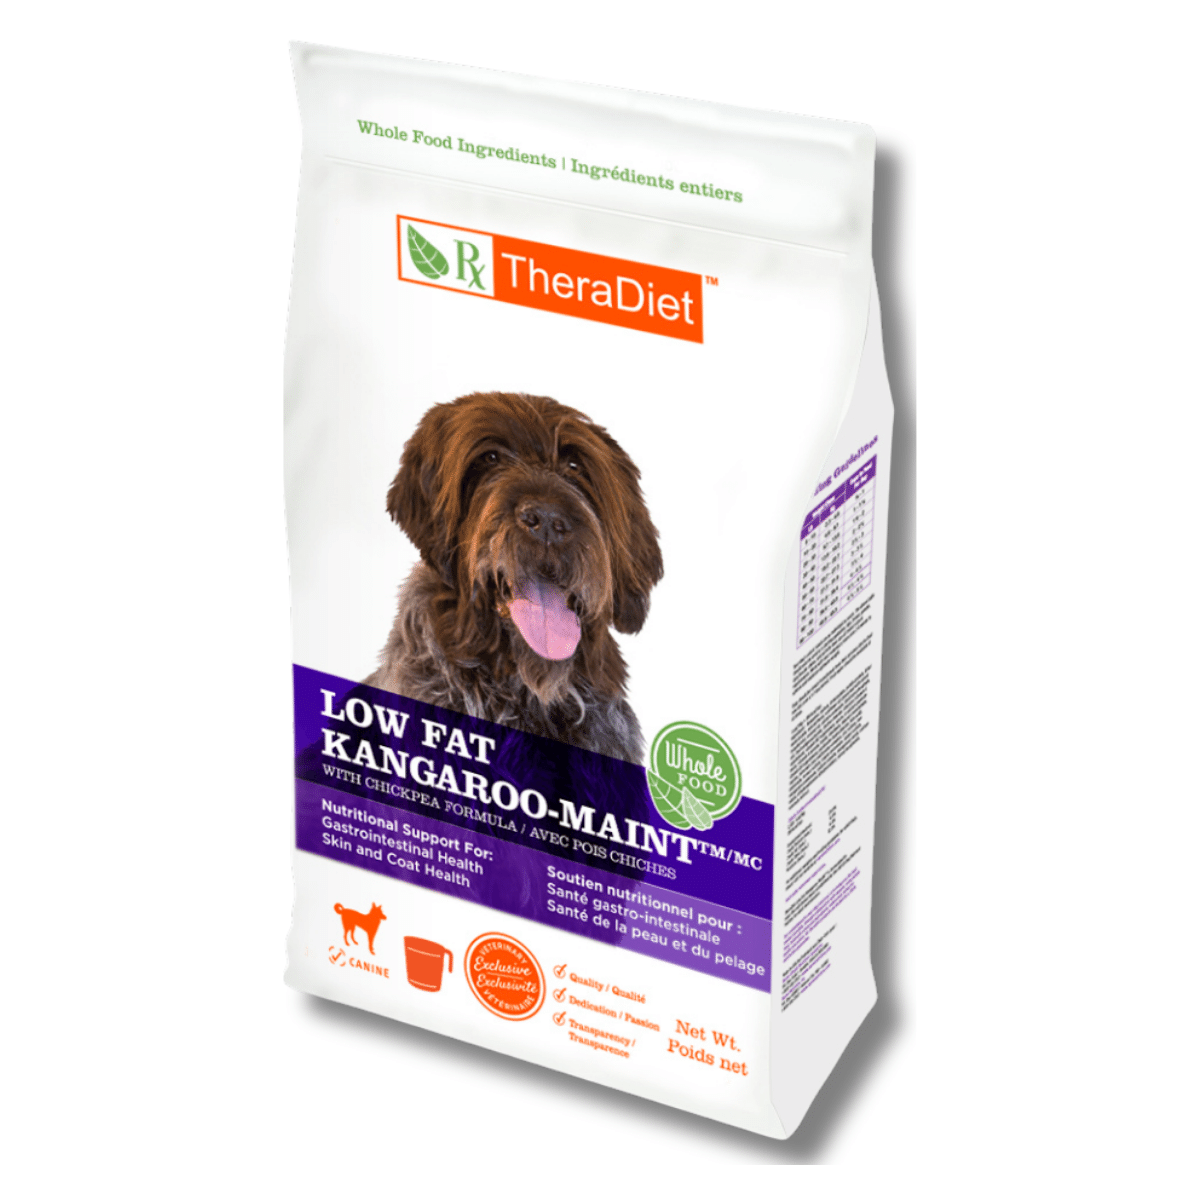 Low Fat Kangaroo-MAINT Dry Dog Food